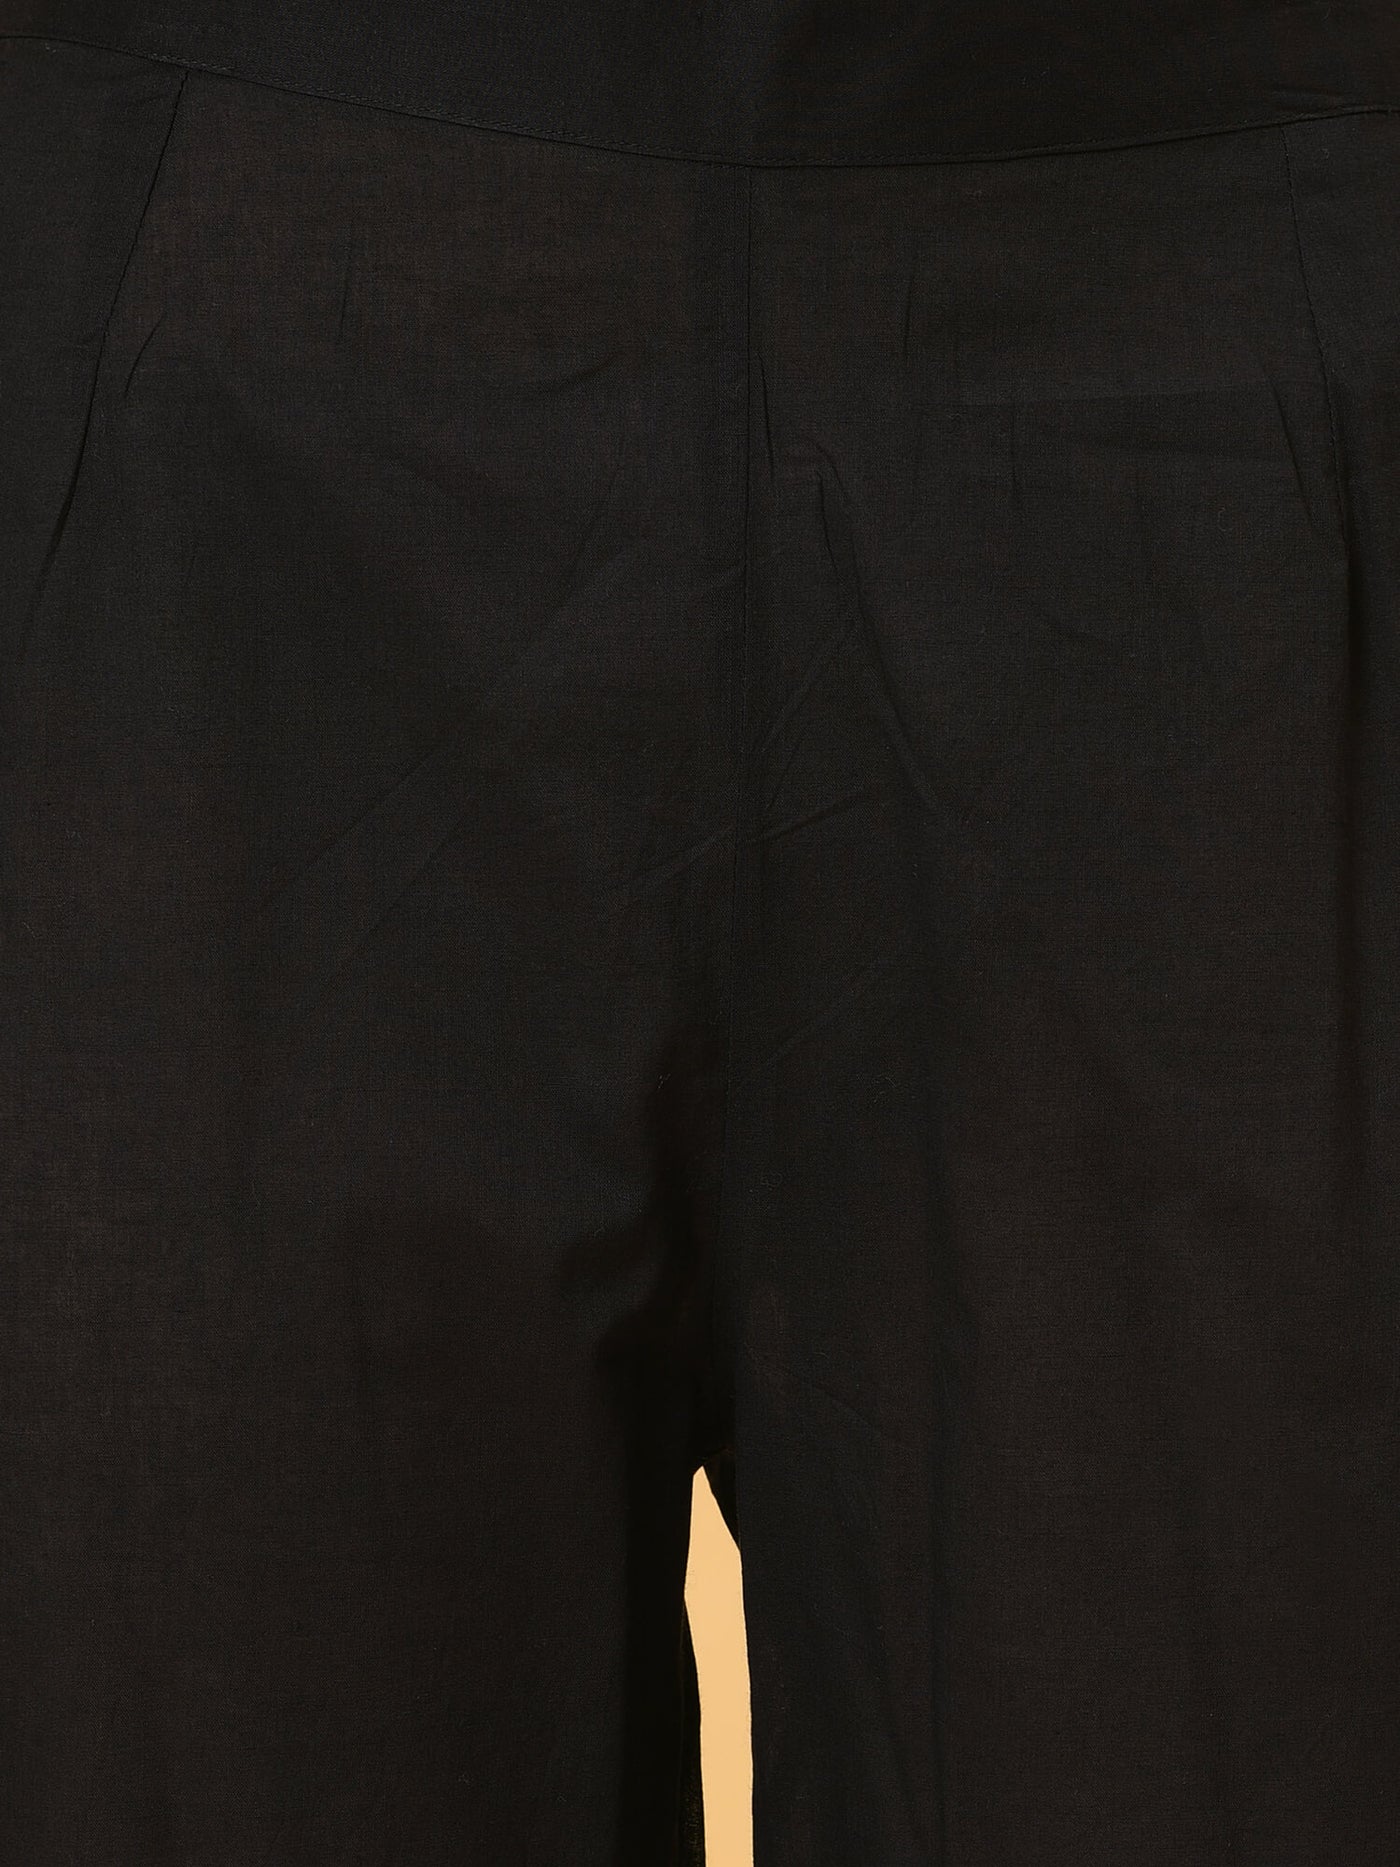 A Cherry black printed kurta with a black pant and Lime green chanderi dupatta